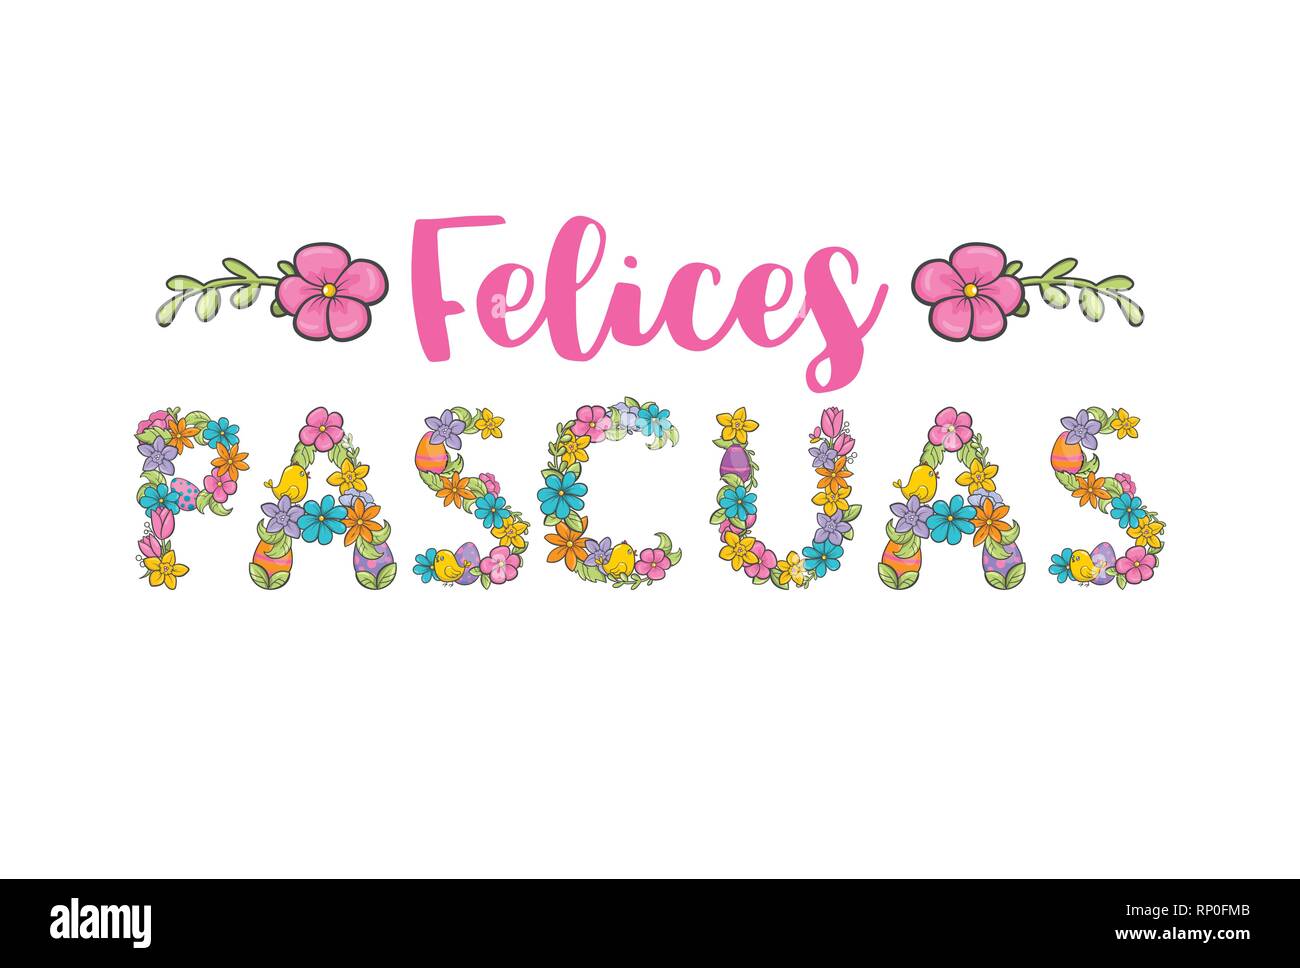 Felices pascuas, Spanisch österlichen Gruß Blume Karte. Christliche Kirche festival Ornament. Stock Vektor